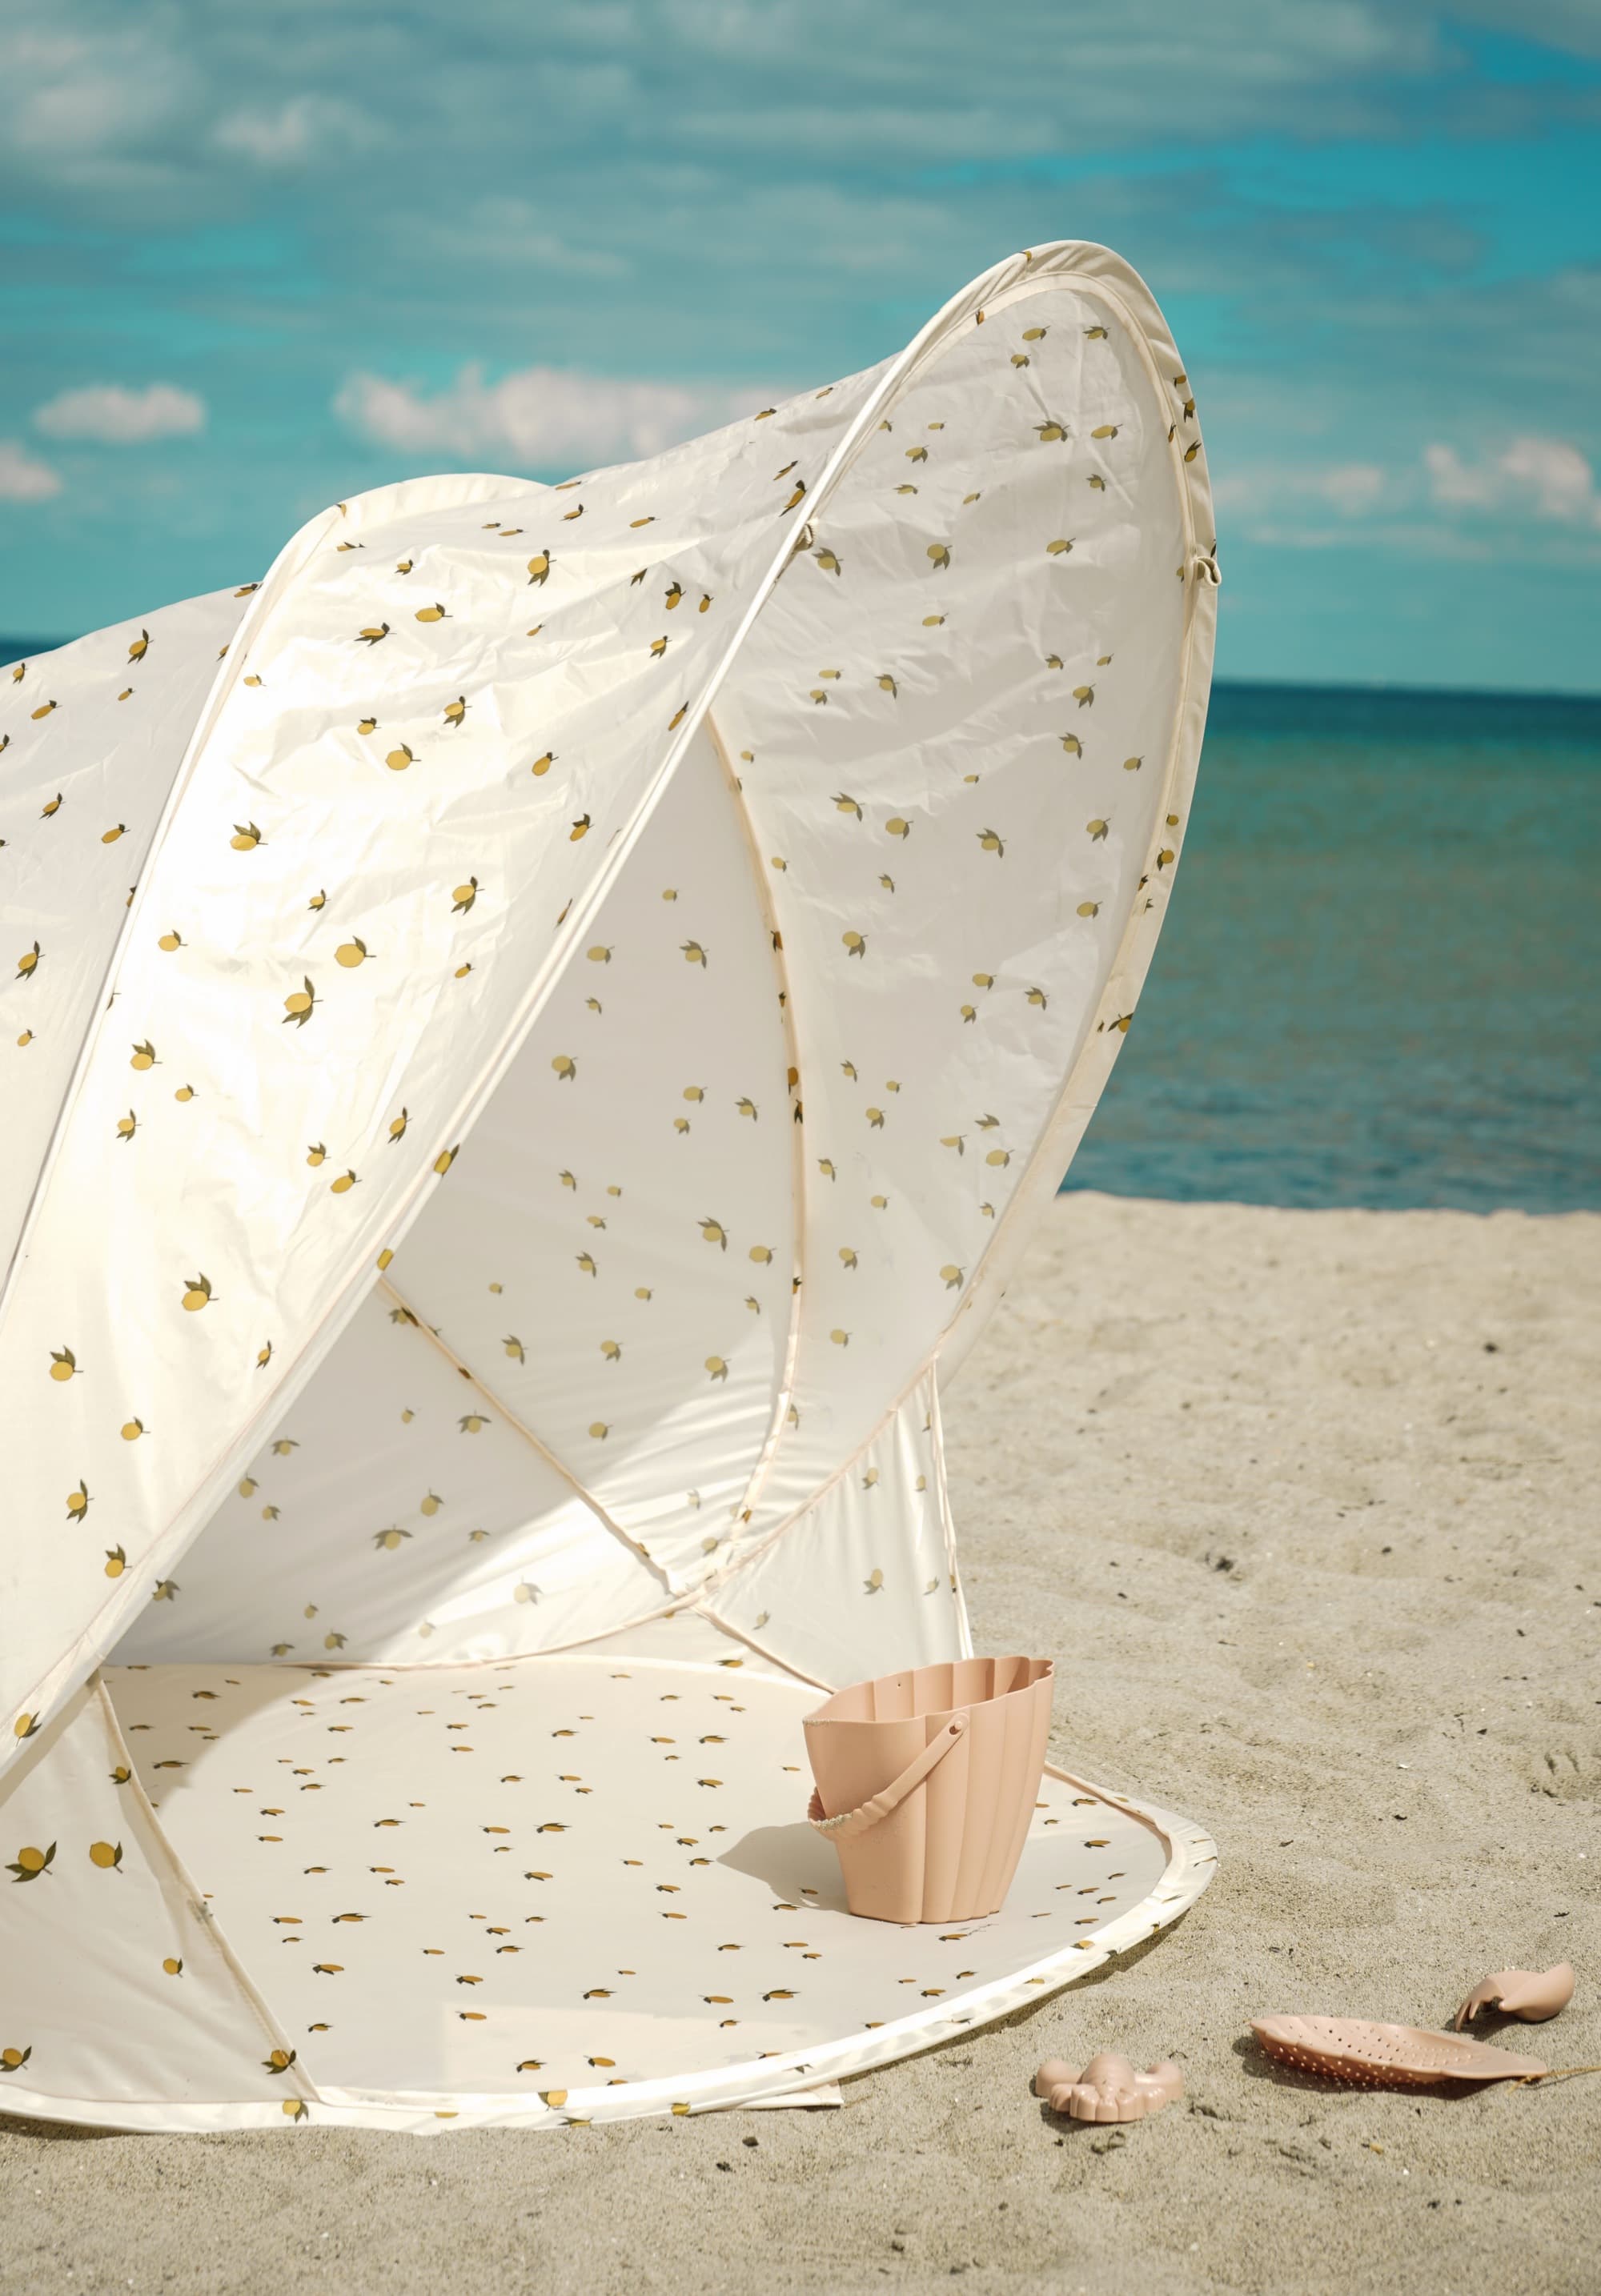 Beach Tent Pop Up Shelter Anti UV Lemon